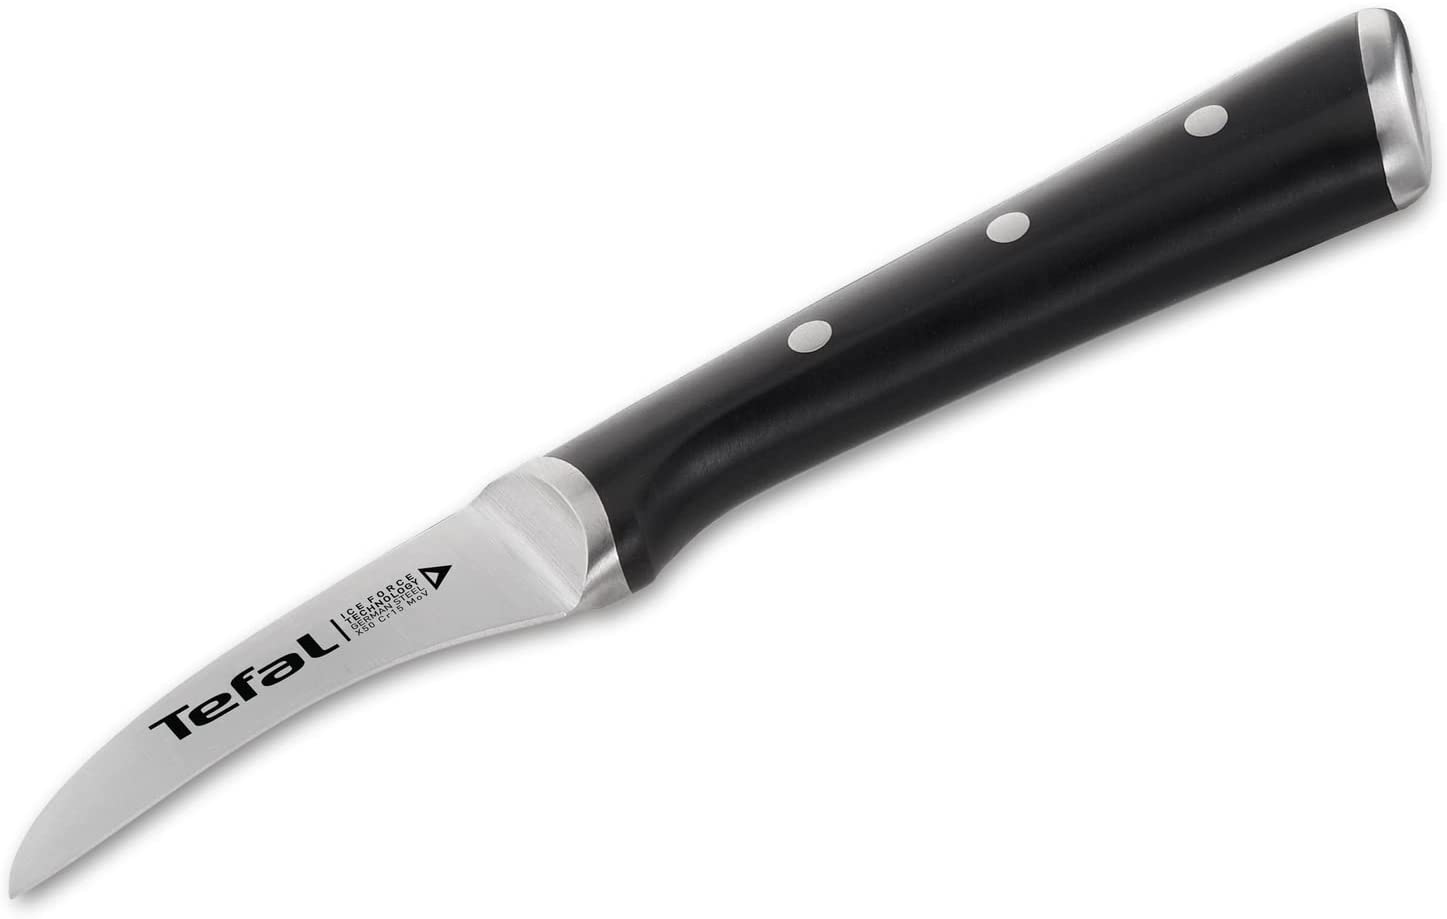 Tefal Ingenio Ice Force Knife - Stainless Steel, Black.